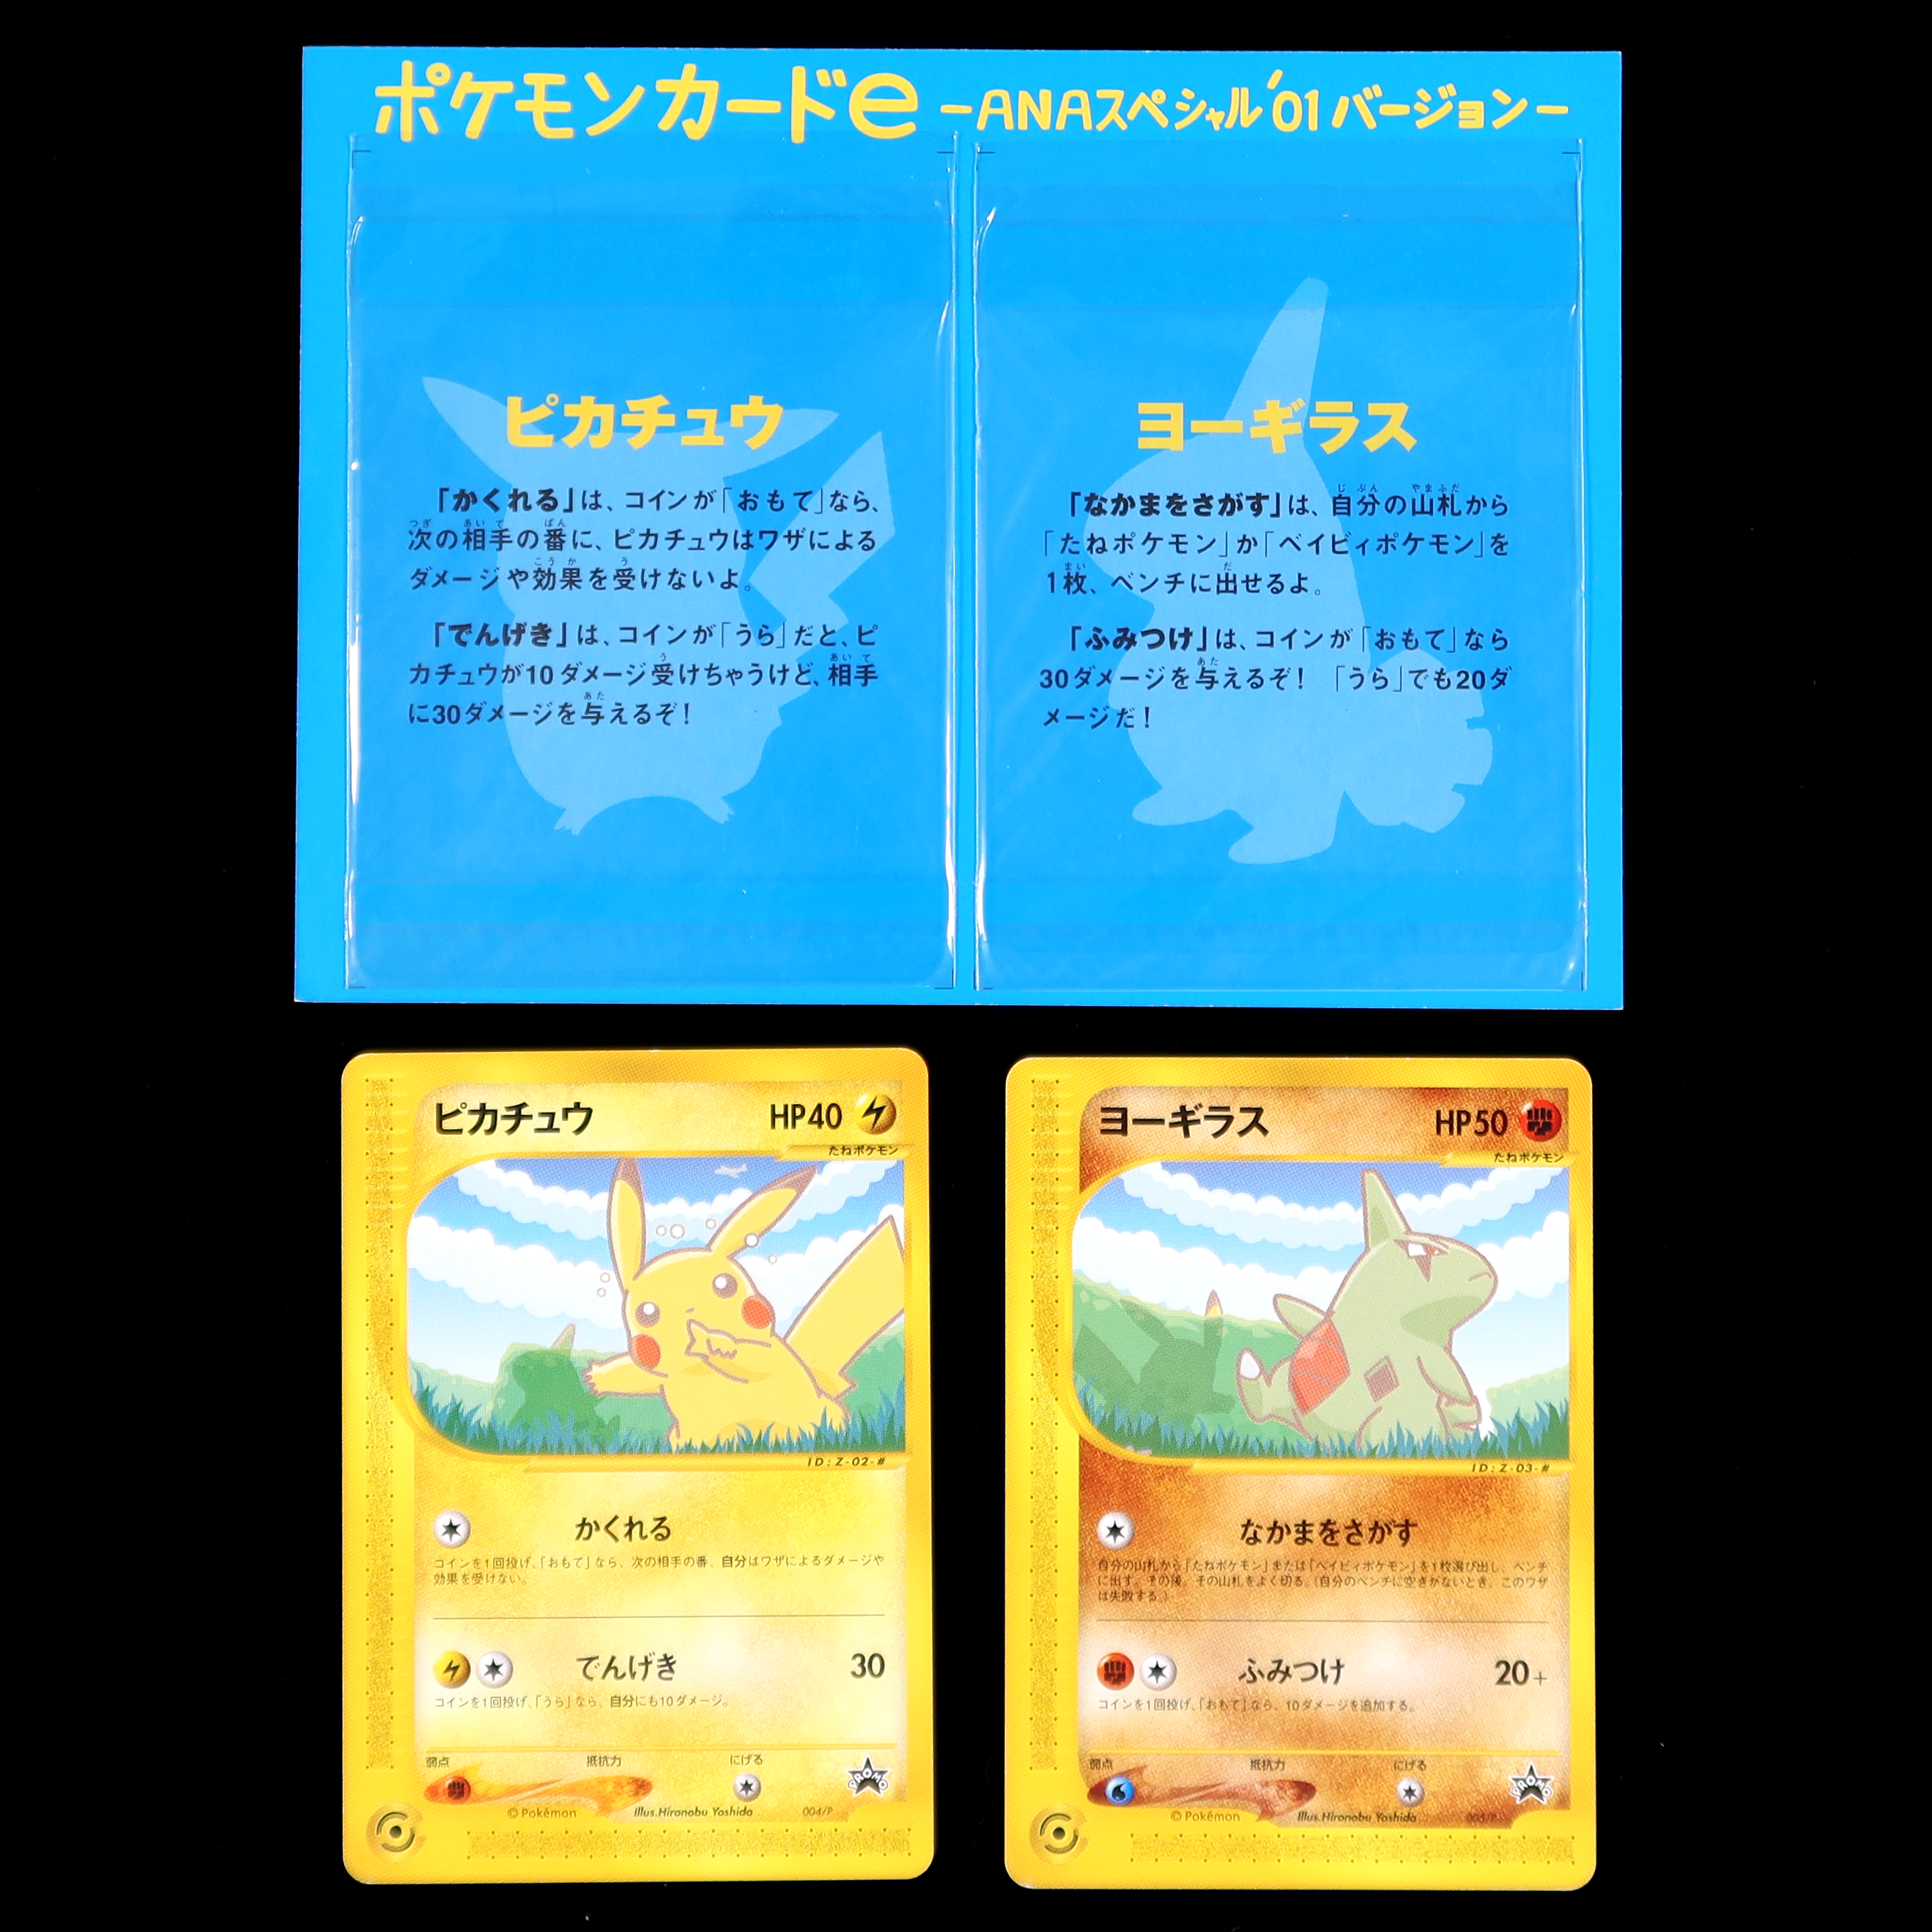 POKEMON CARD GAME POKÉMON CARD e - ANA Special'01 Version